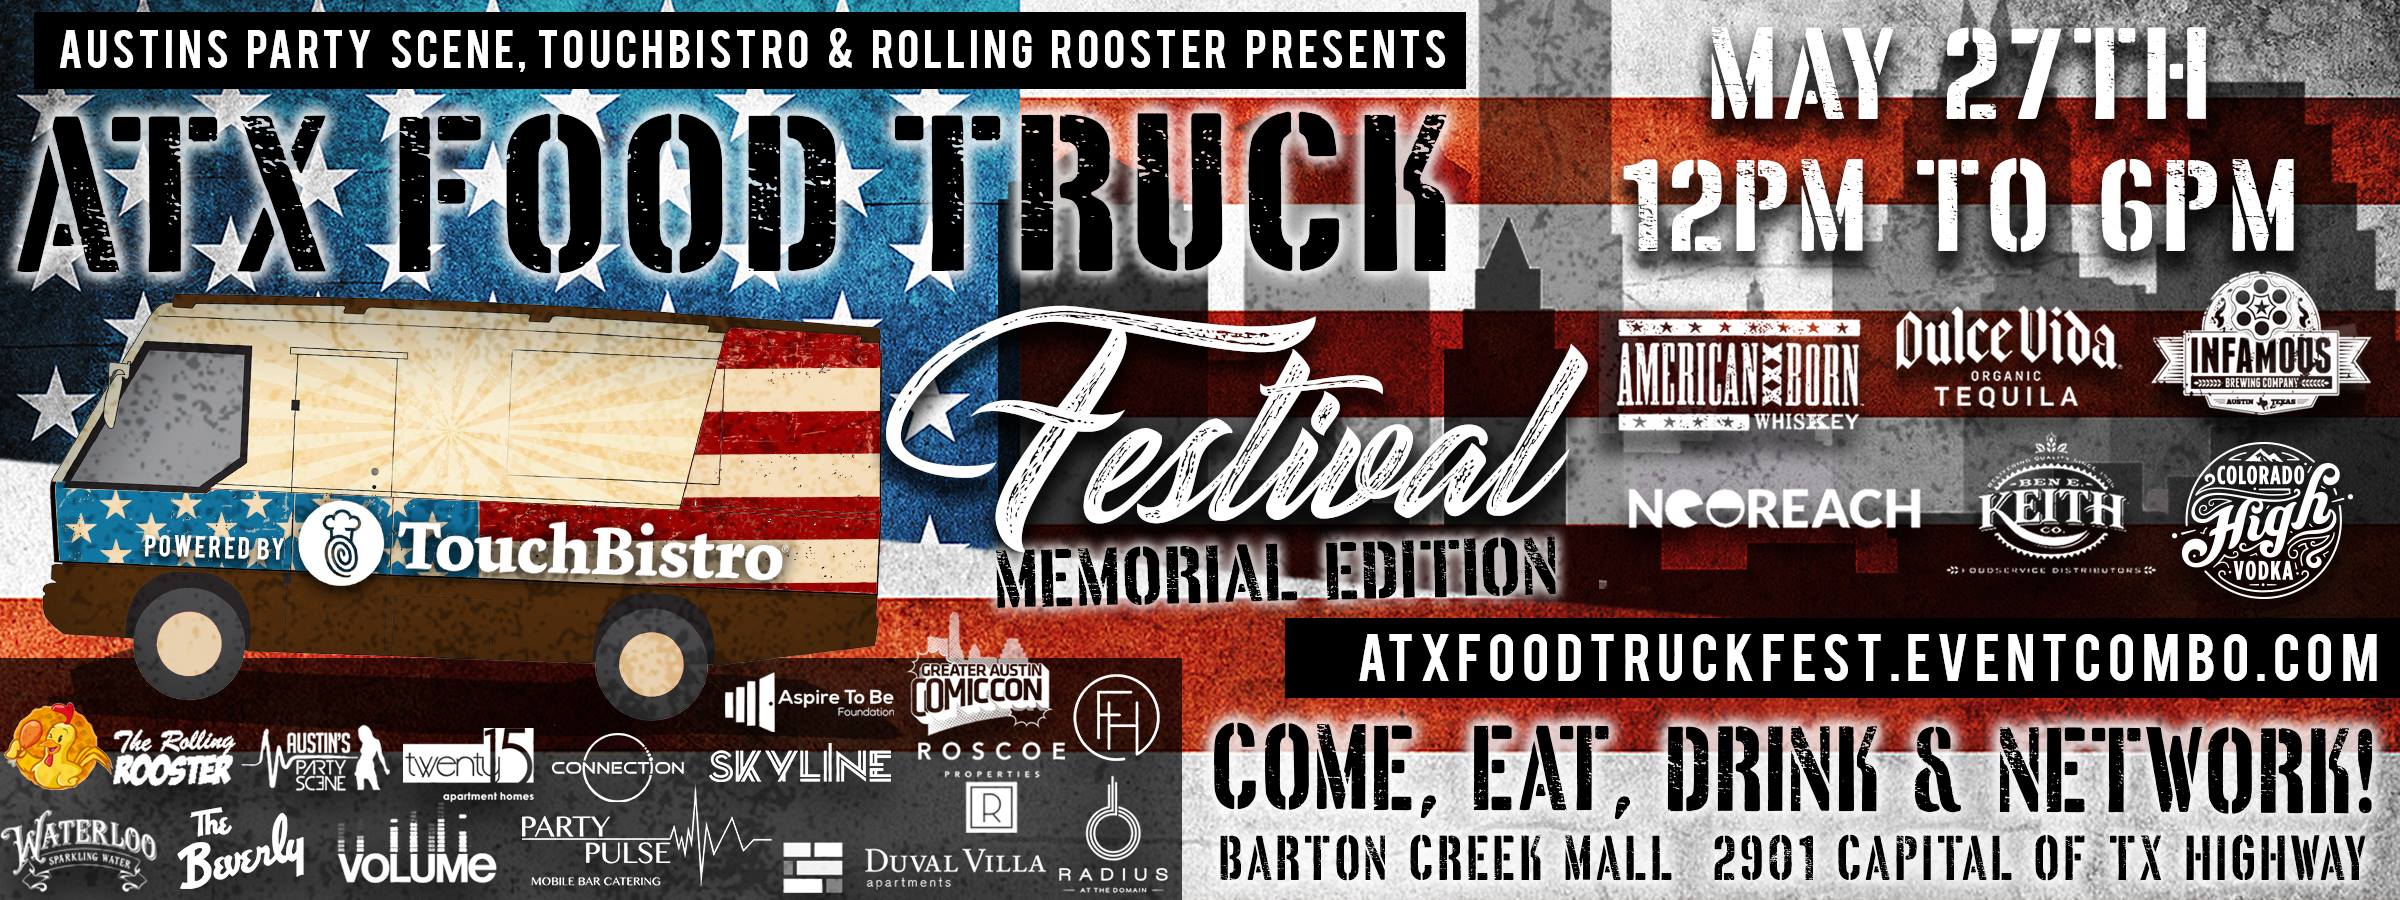 ATX Food Truck Festival "Memorial Weekend Edition"